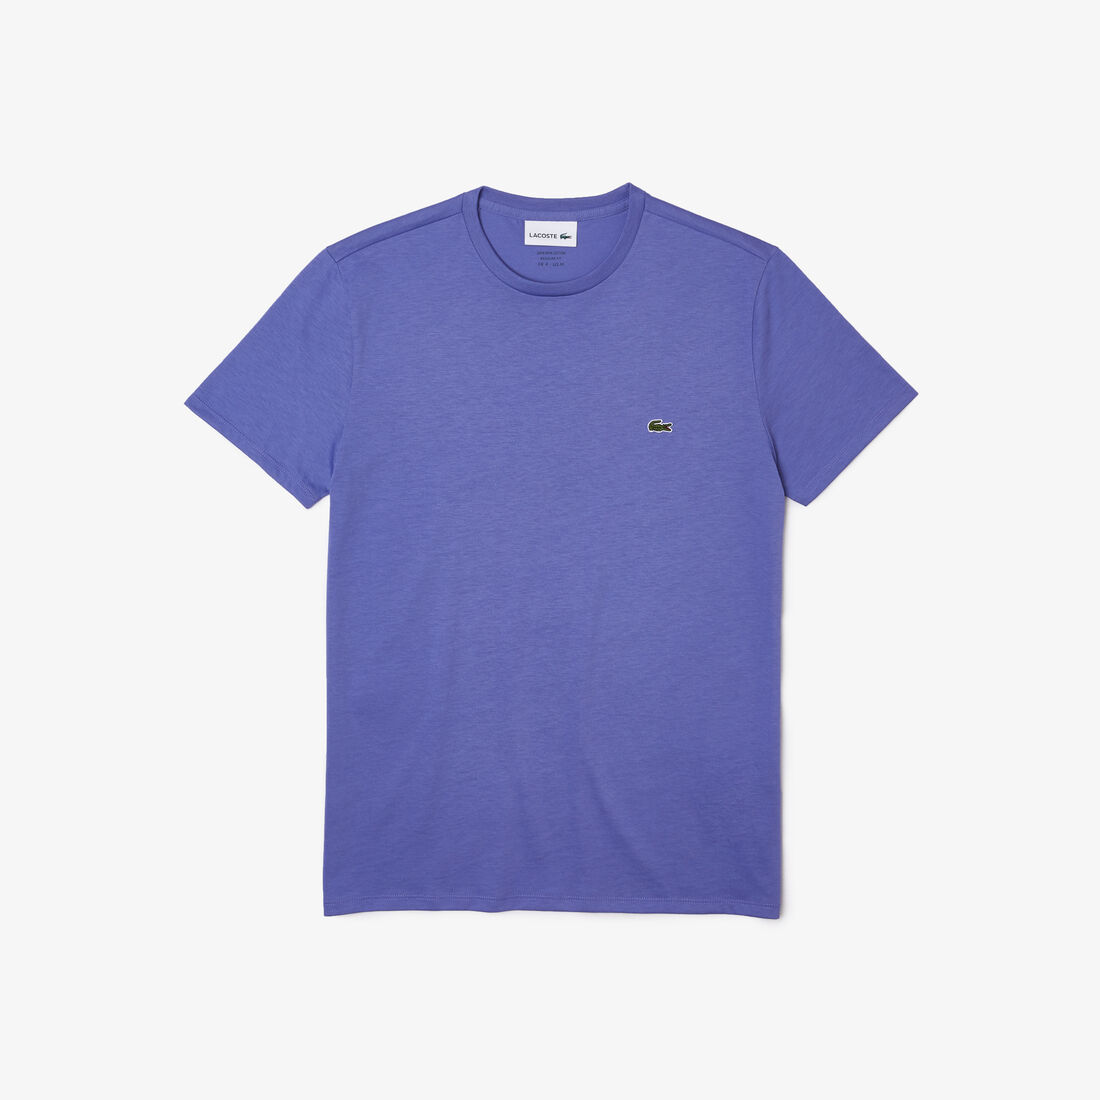 Lacoste Crew Neck Pima Baumwoll Jersey T-shirts Herren Blau | GQET-75689